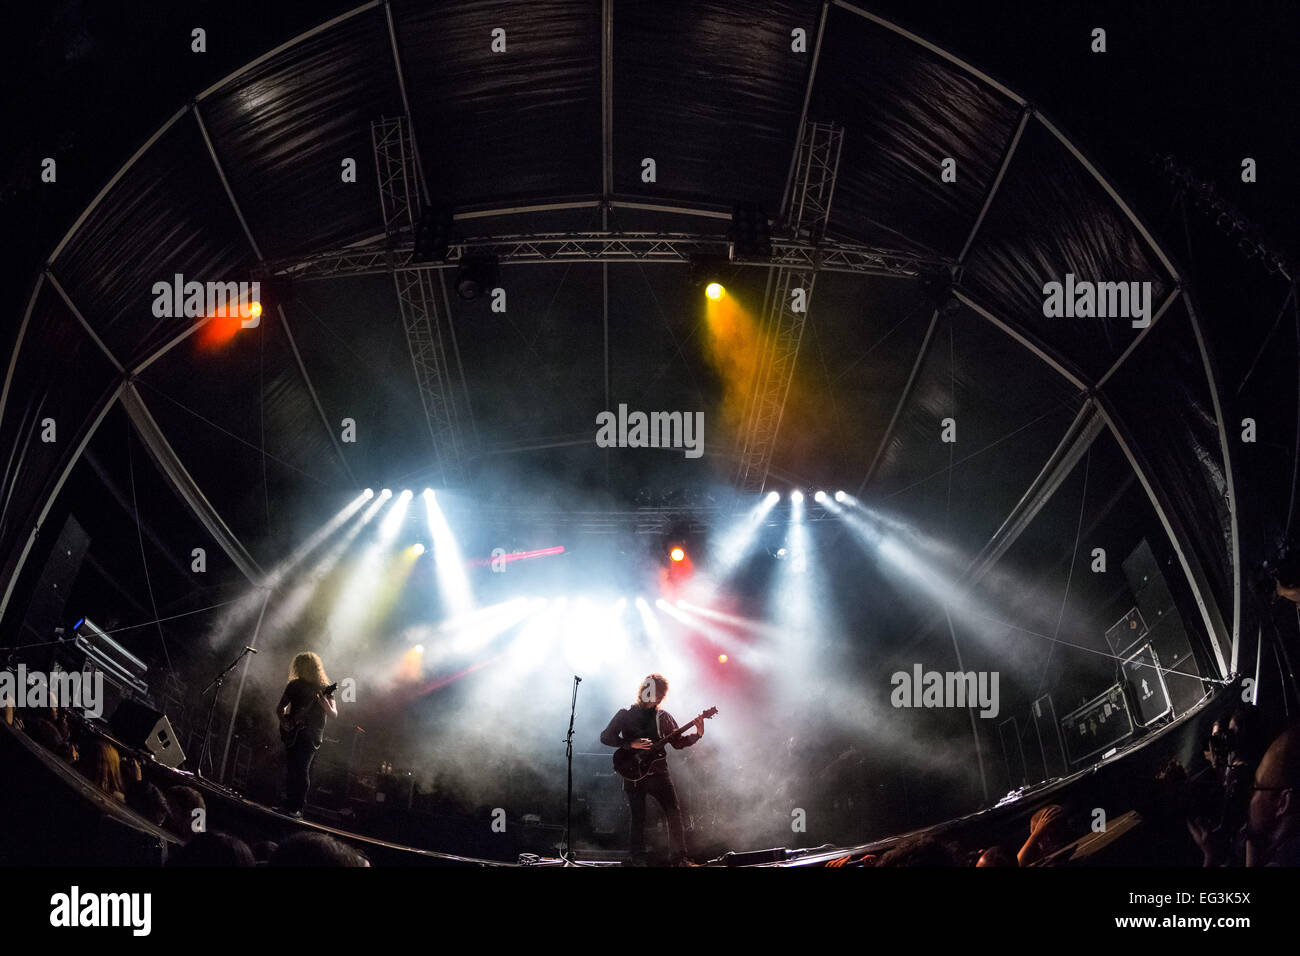 Opeth performing live - 2014  Festival Vagos Open Air - Day 2  Featuring: Mikael Akerfeldt,Fredrik Akesson Where: Vagos, Portugal When: 09 Aug 2014 Stock Photo